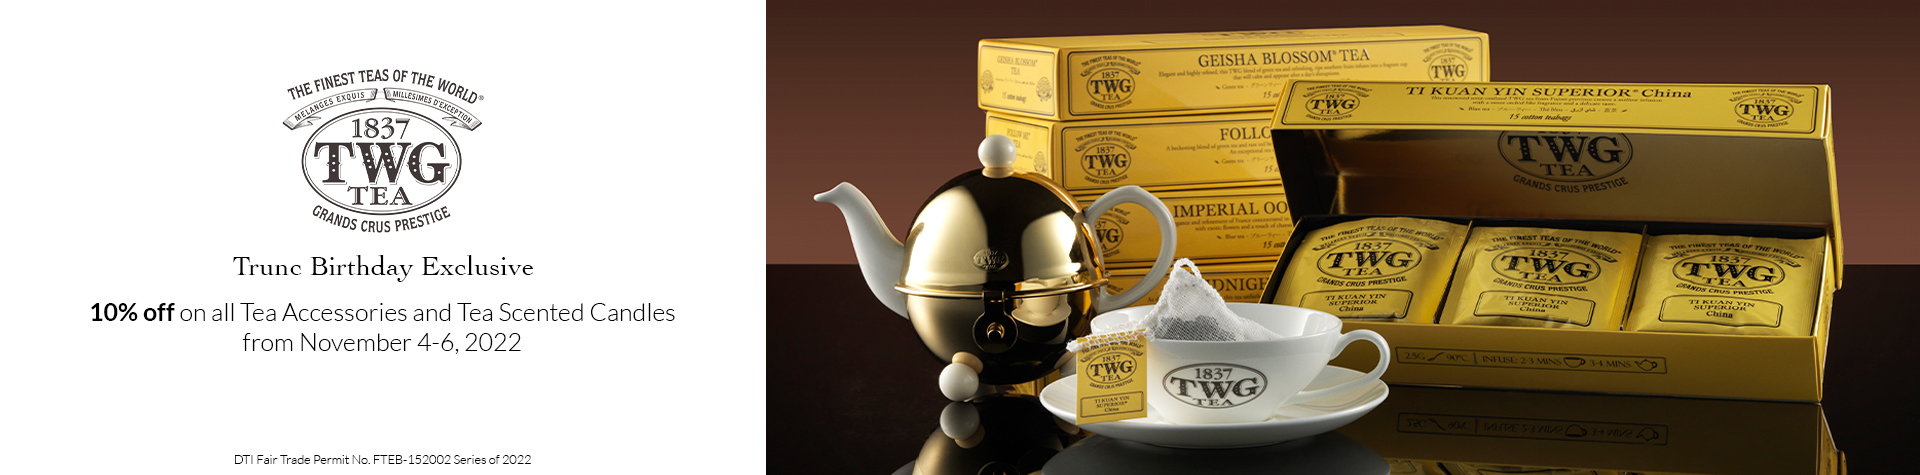 TWG Tea - Premium Corporate Gifts Singapore